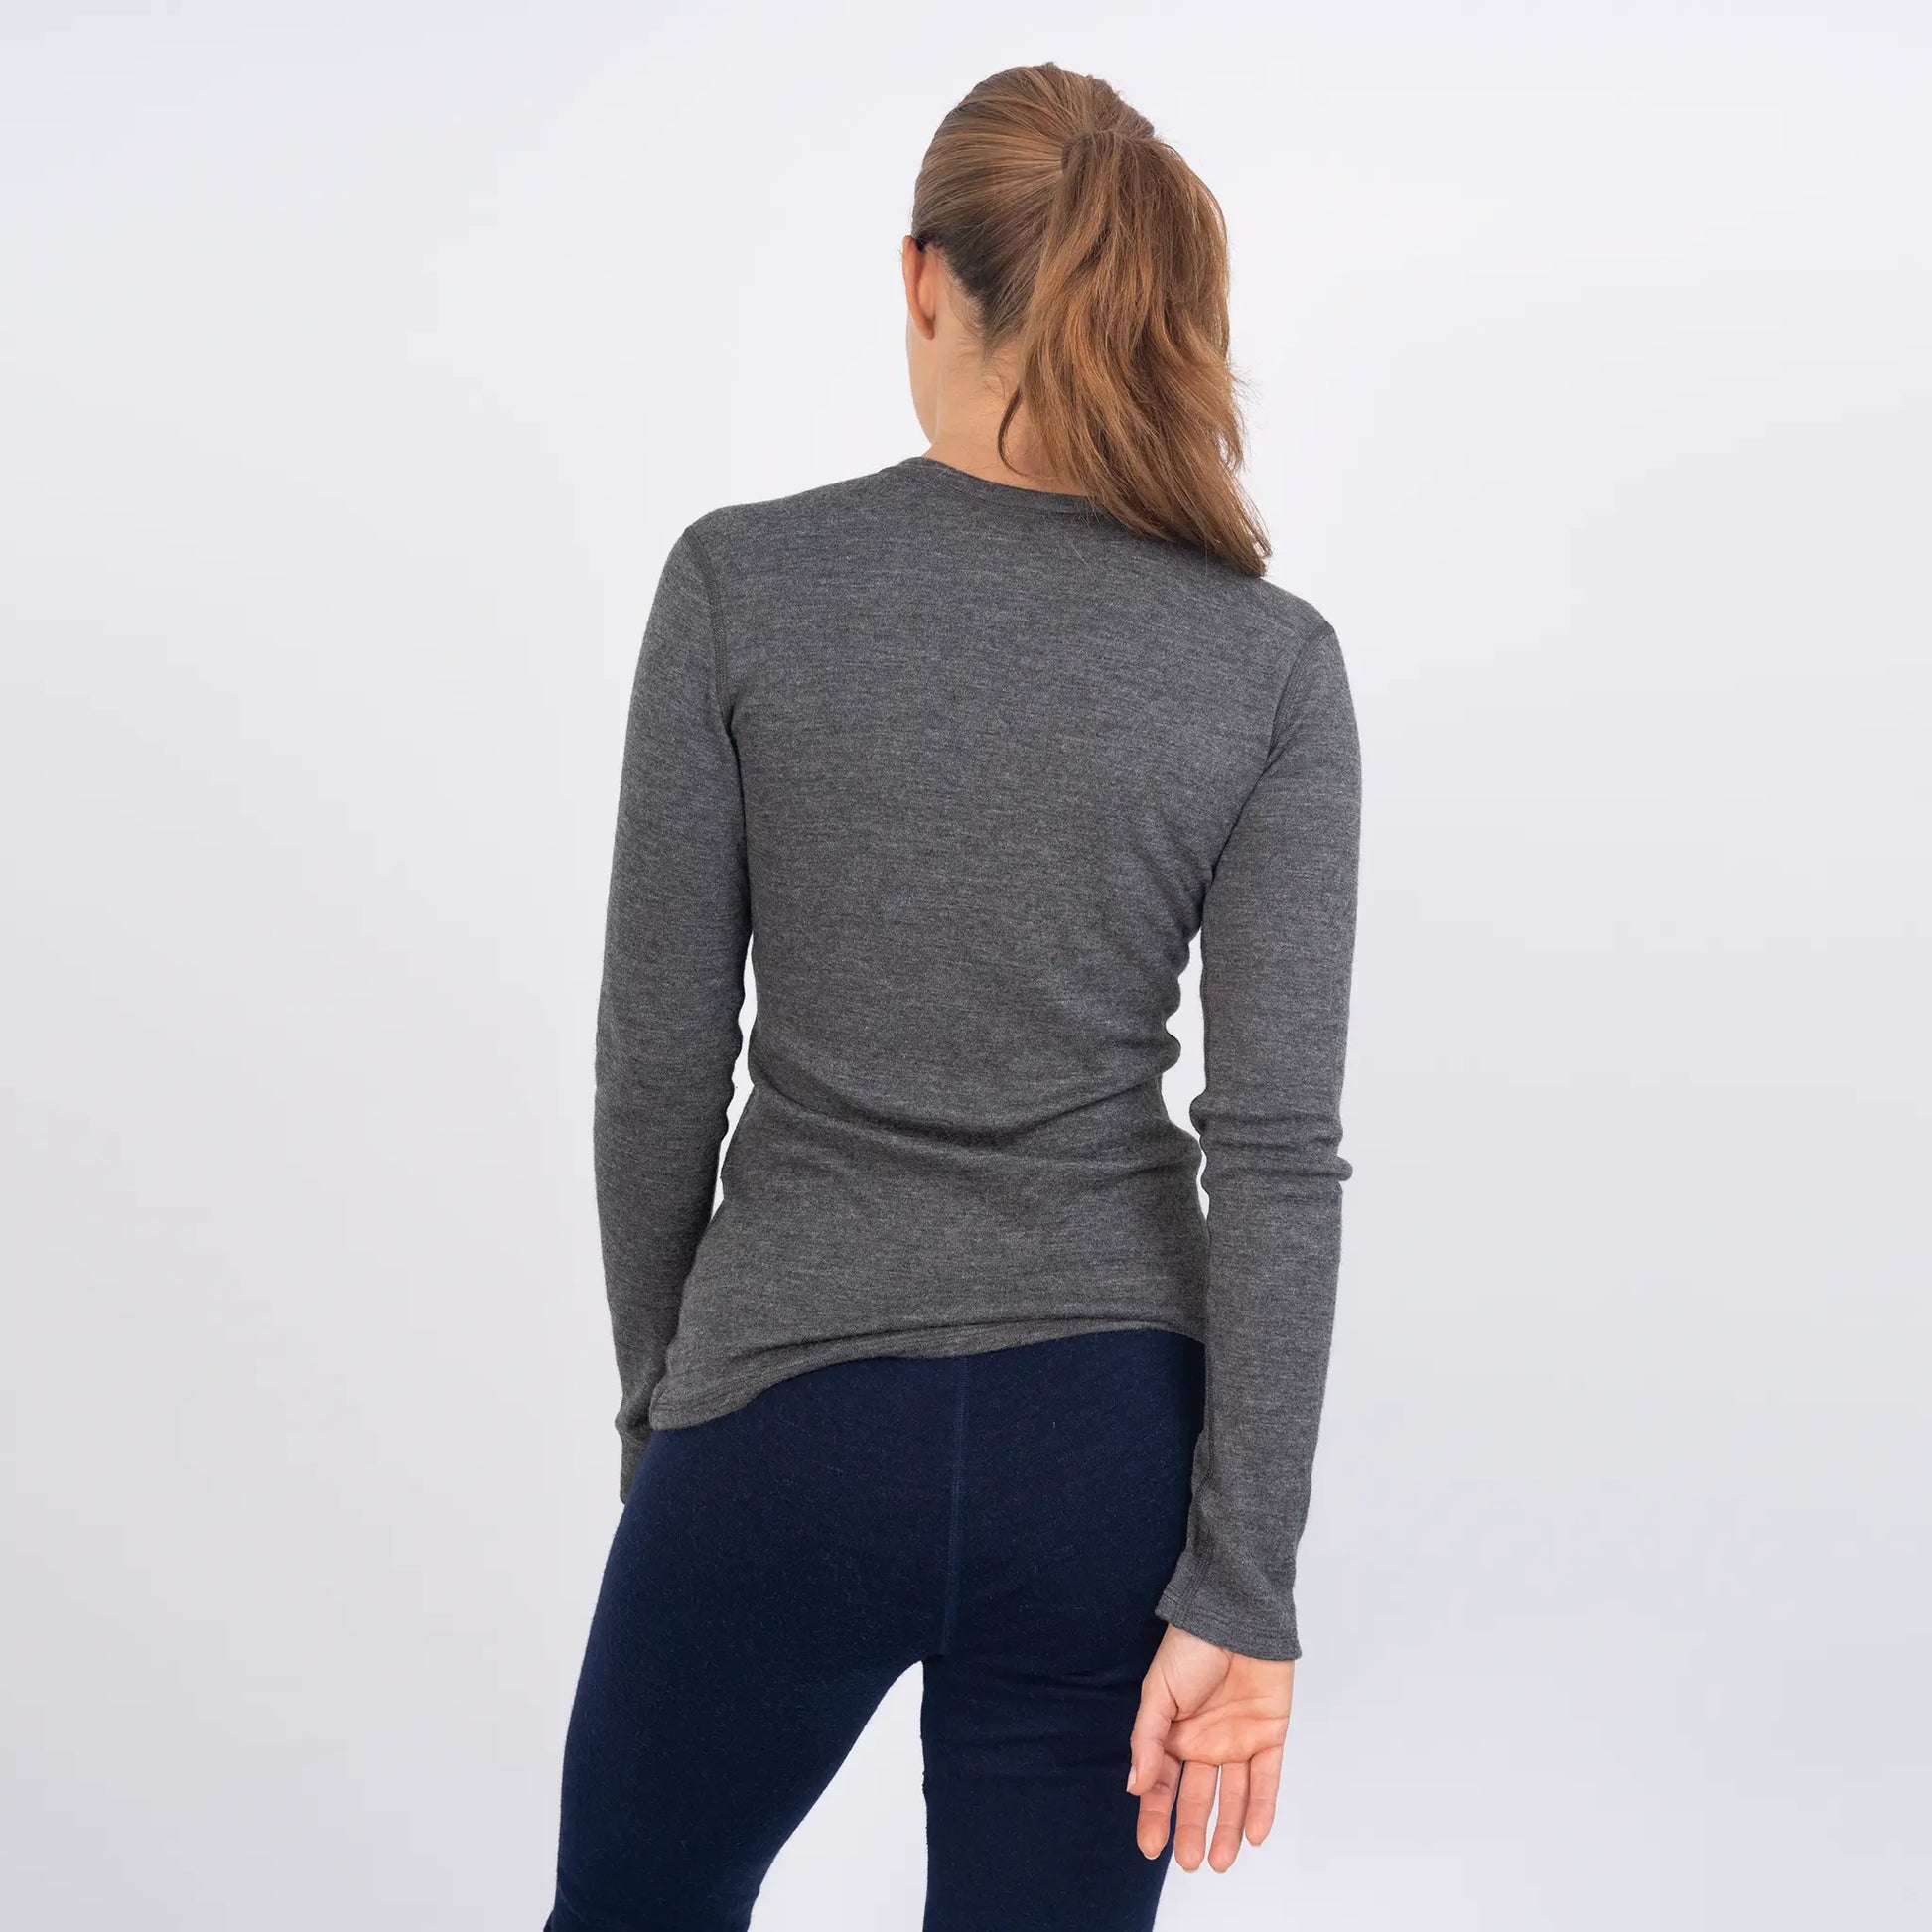 womens alpaca sweater warmest lightweight color gray